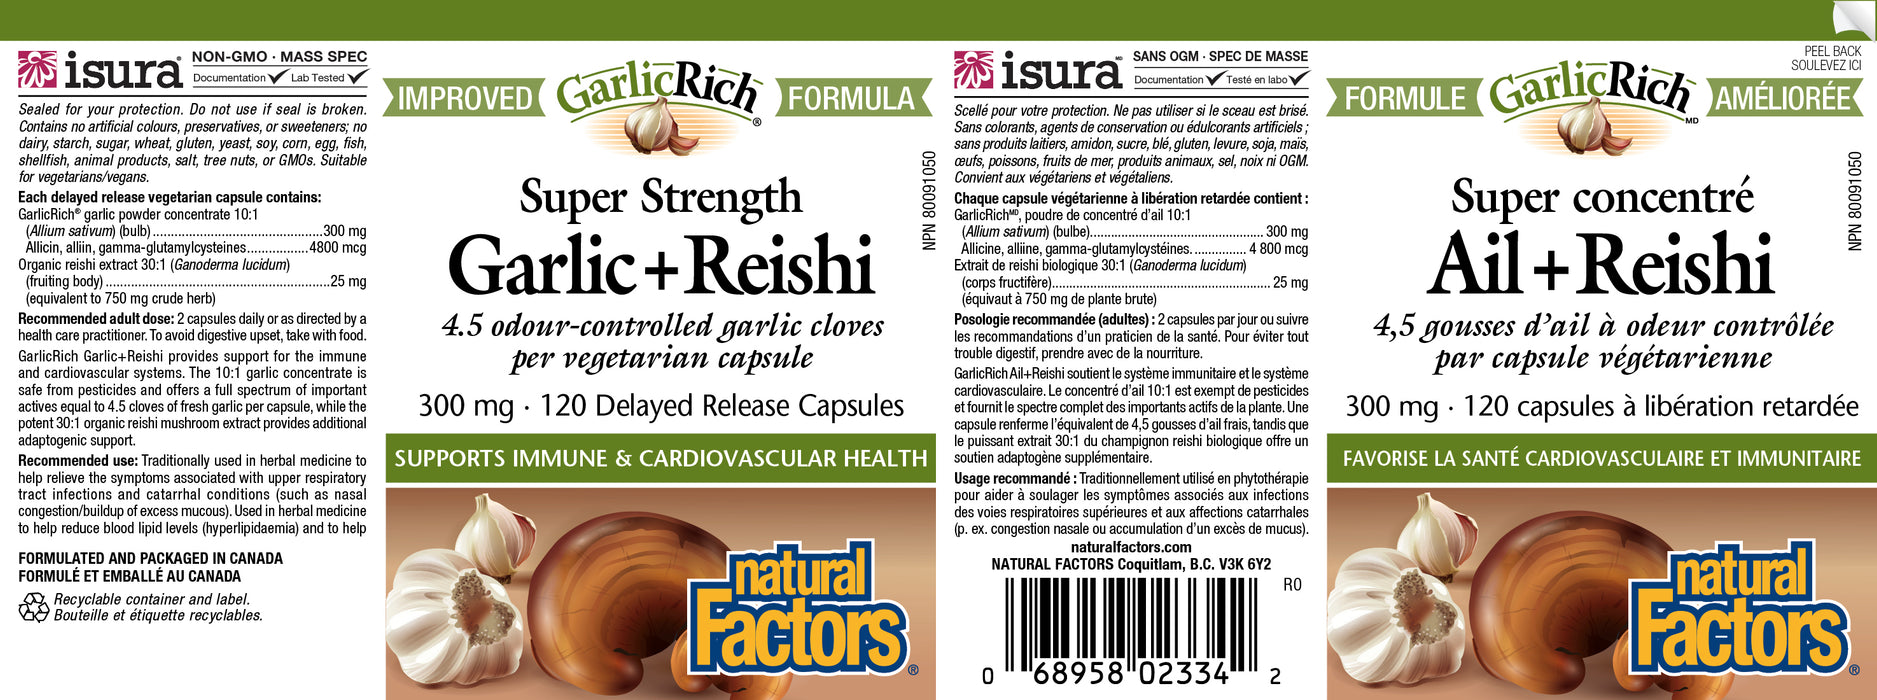 Natural Factors GarlicRich Super Strength Garlic + Reishi 120 Delayed Release Vegetarian Capsules